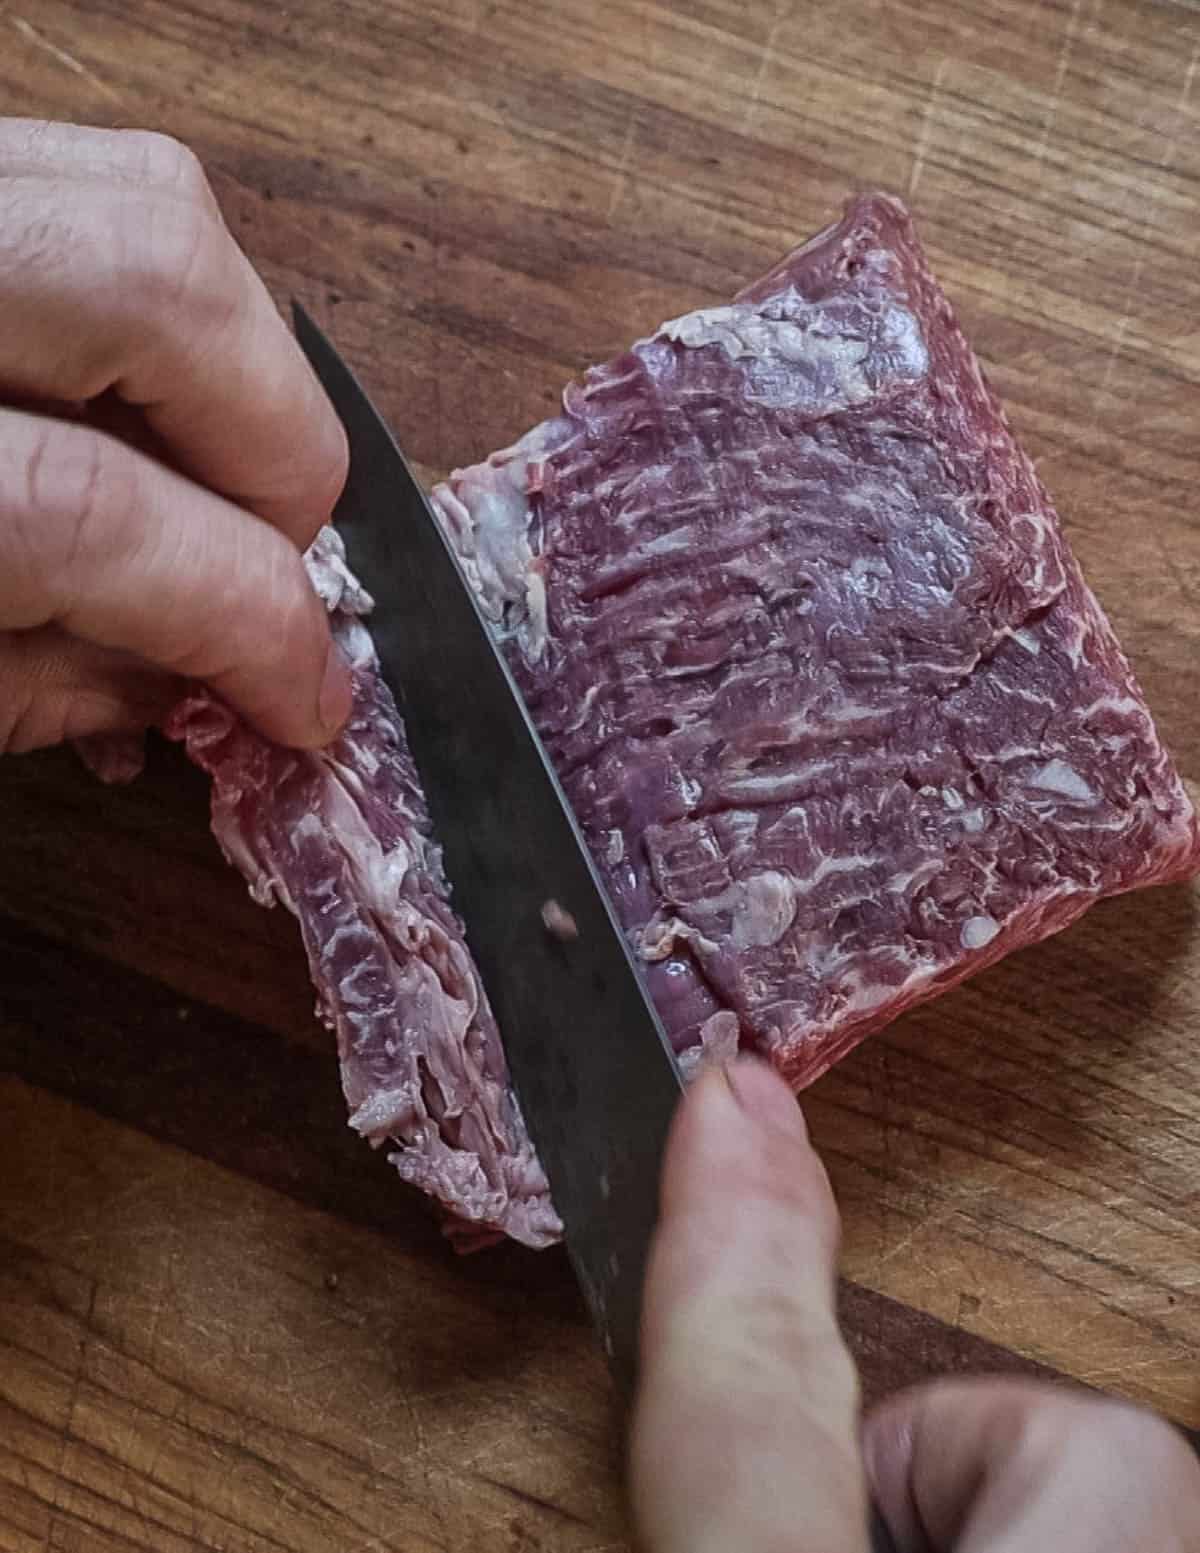 Removing silver skin from the bavette steak.